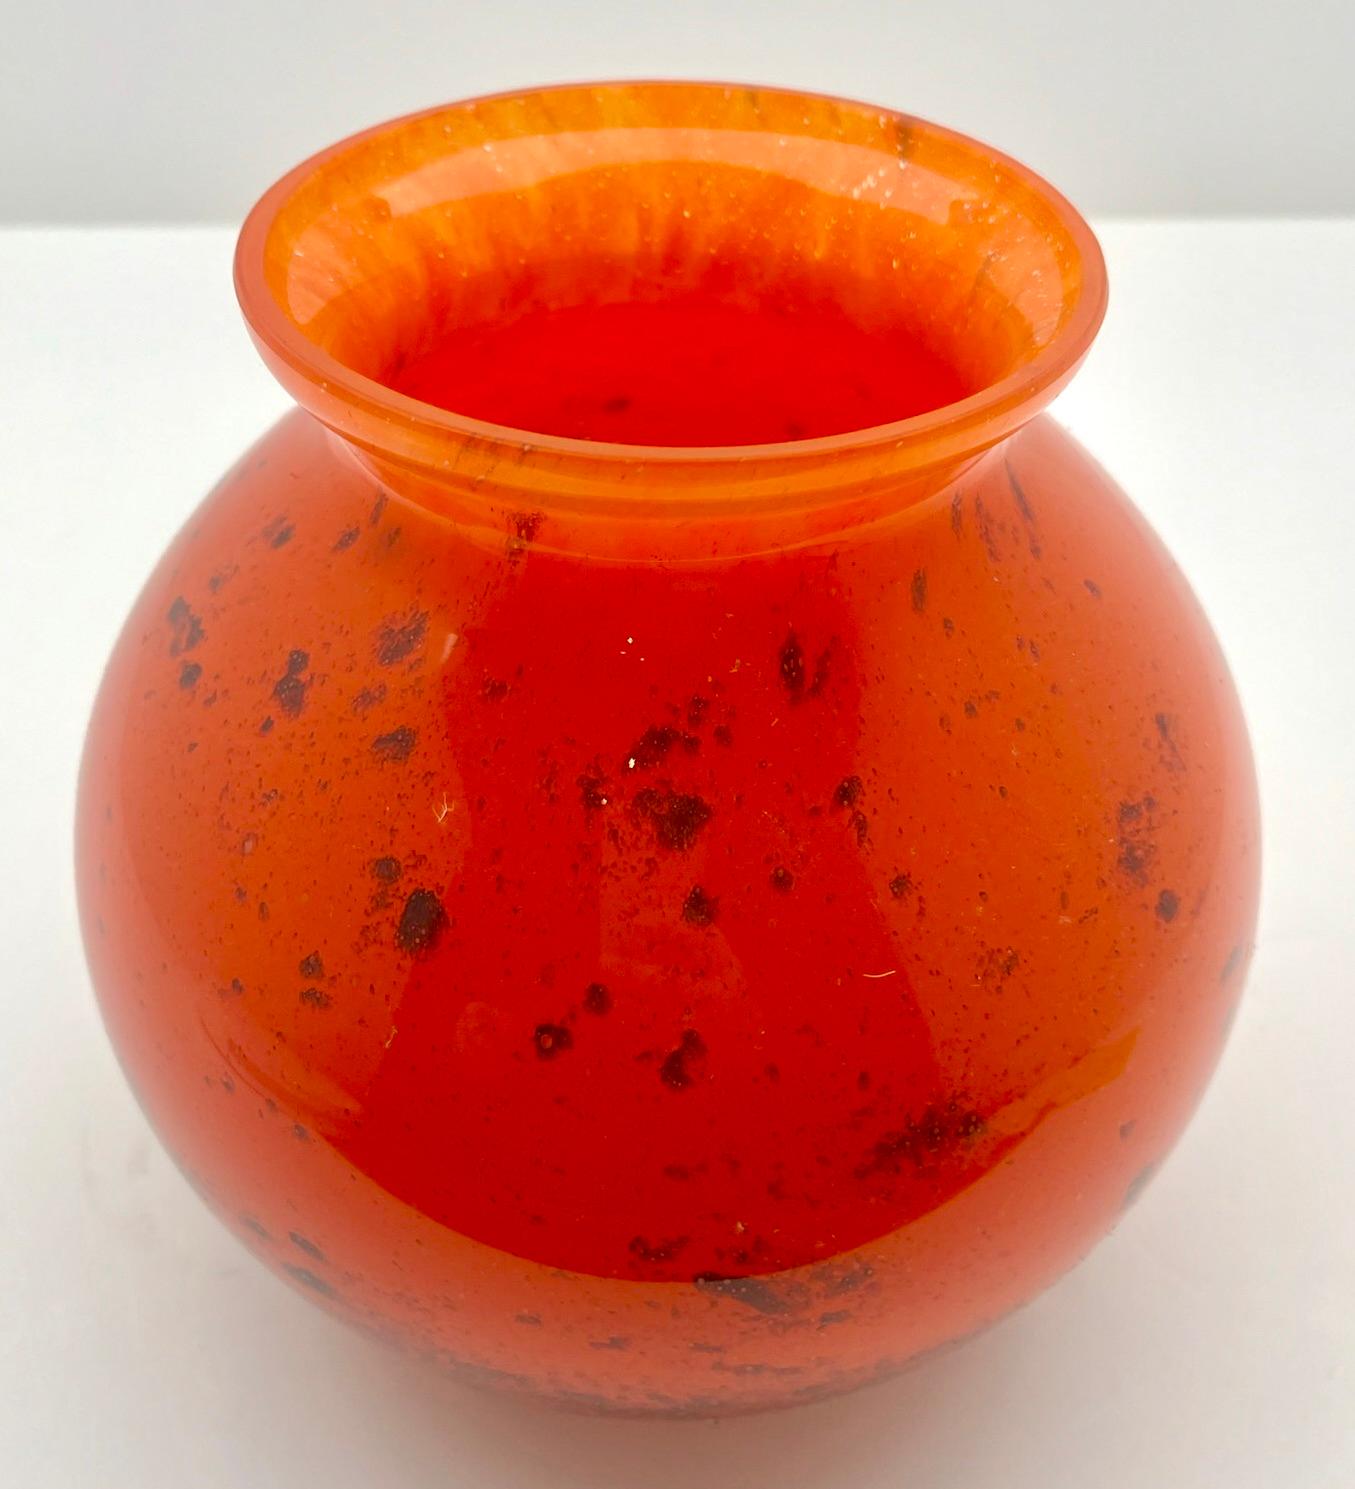 Art Deco Ikora Art Glass Vase, Produced, by WMF in Germany, 1930s by Karl Wiedmann For Sale